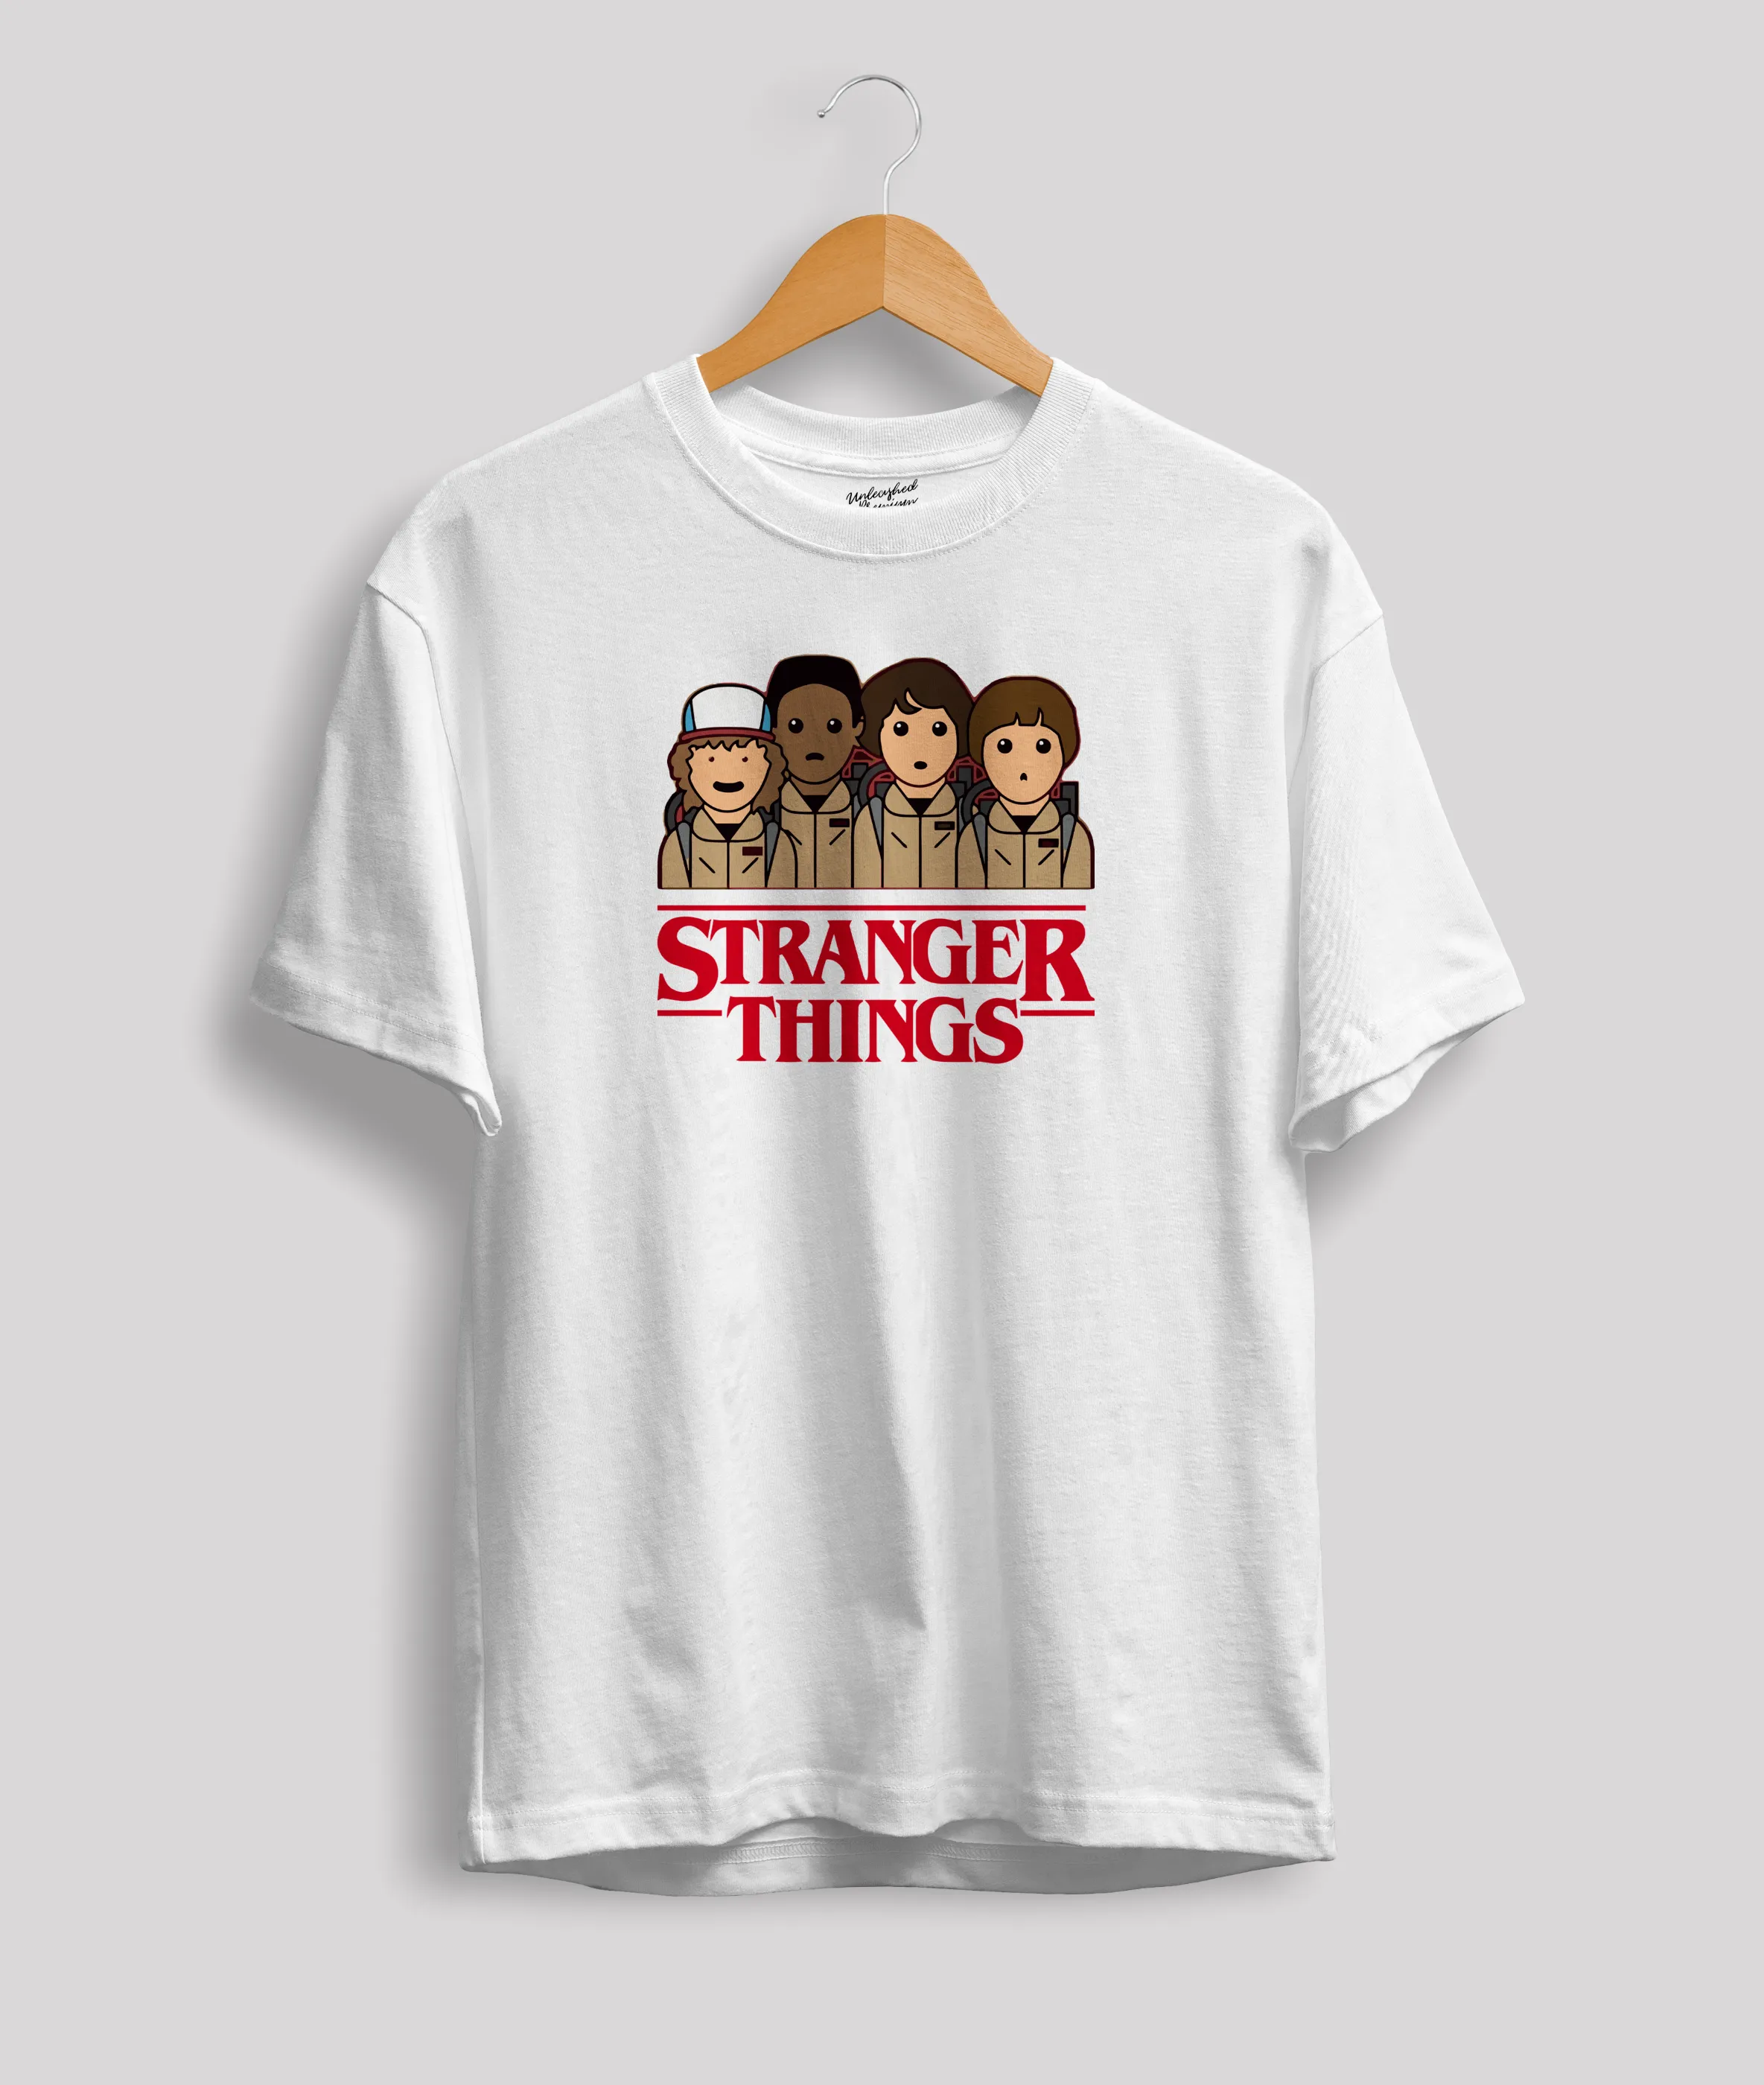 Stranger Things kids gang t-shirt